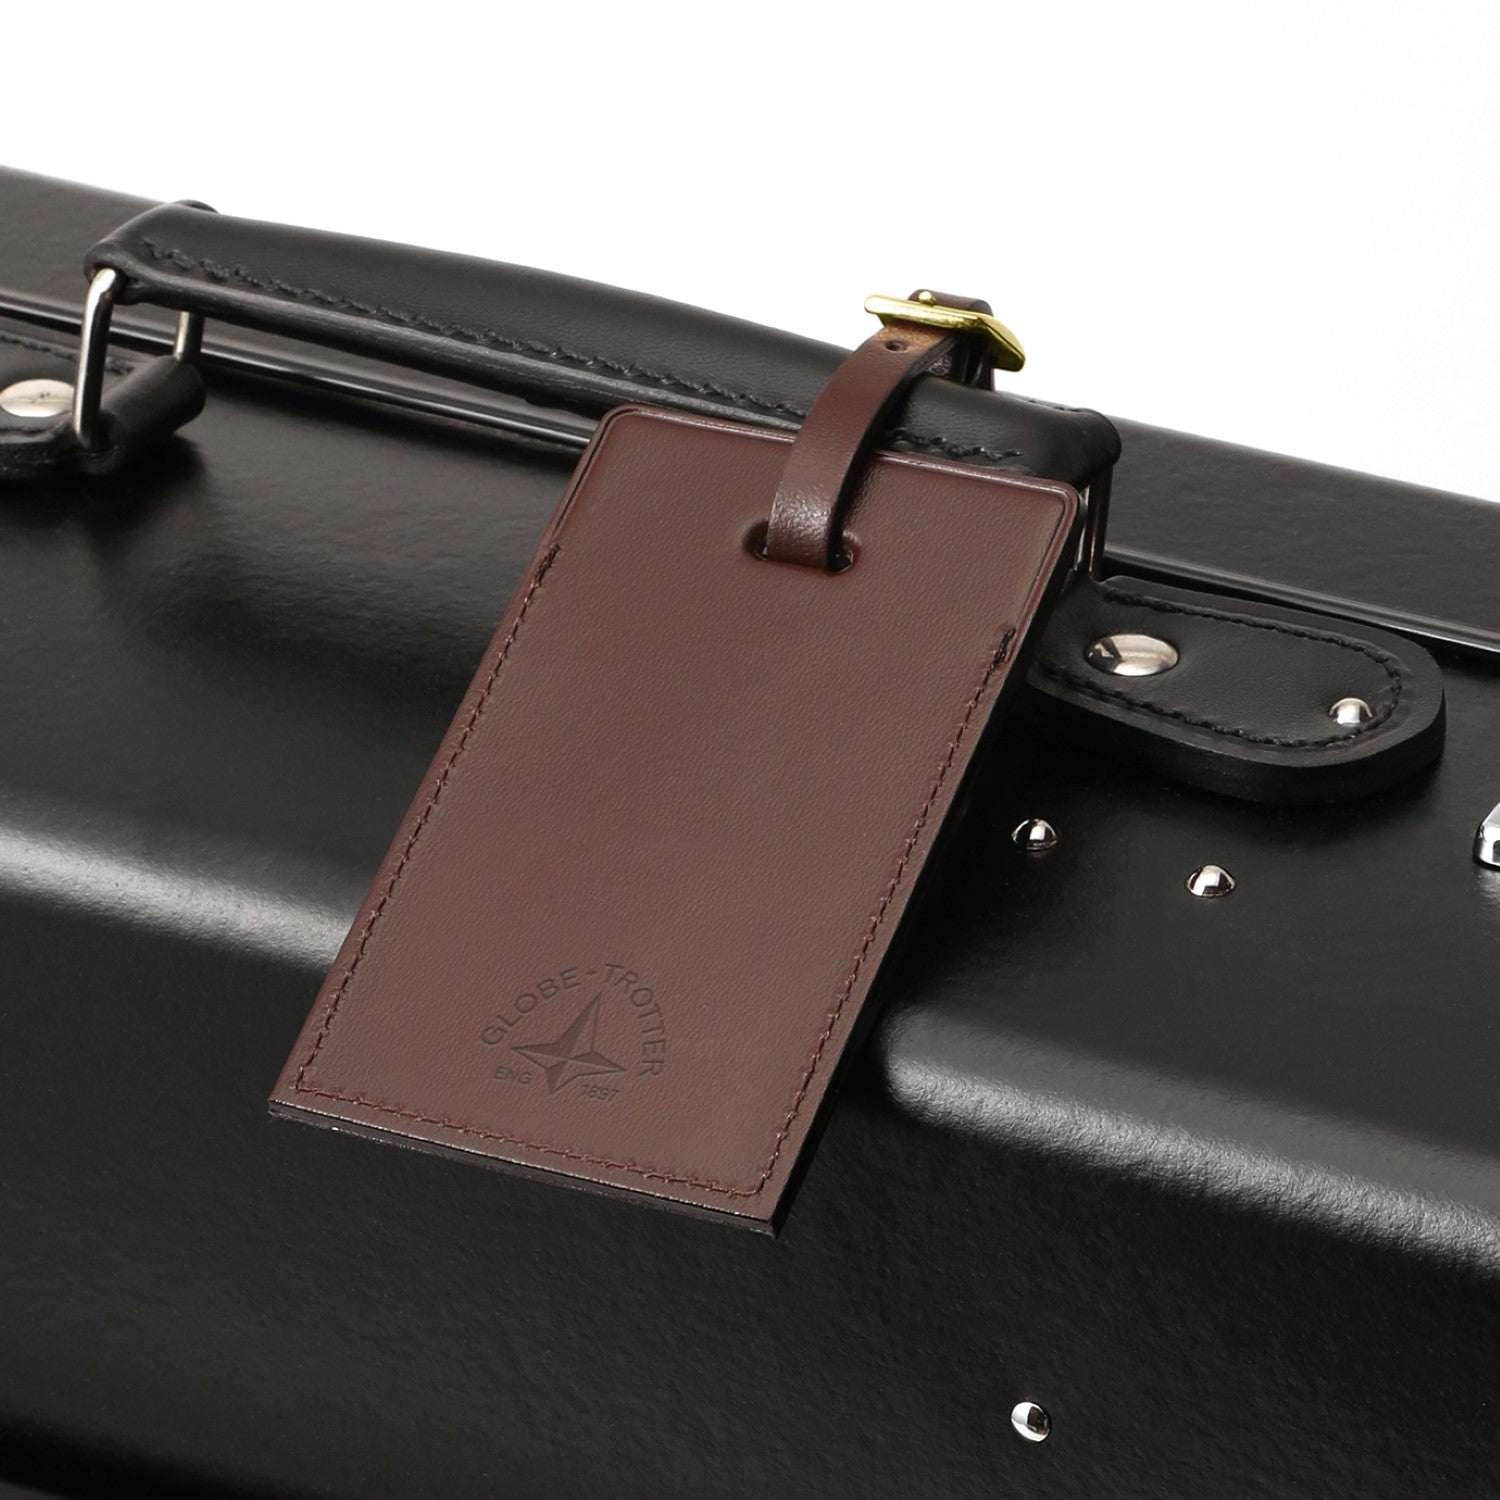 Louis Vuitton Toledo Blue Leather Small Luggage Tag - Yoogi's Closet